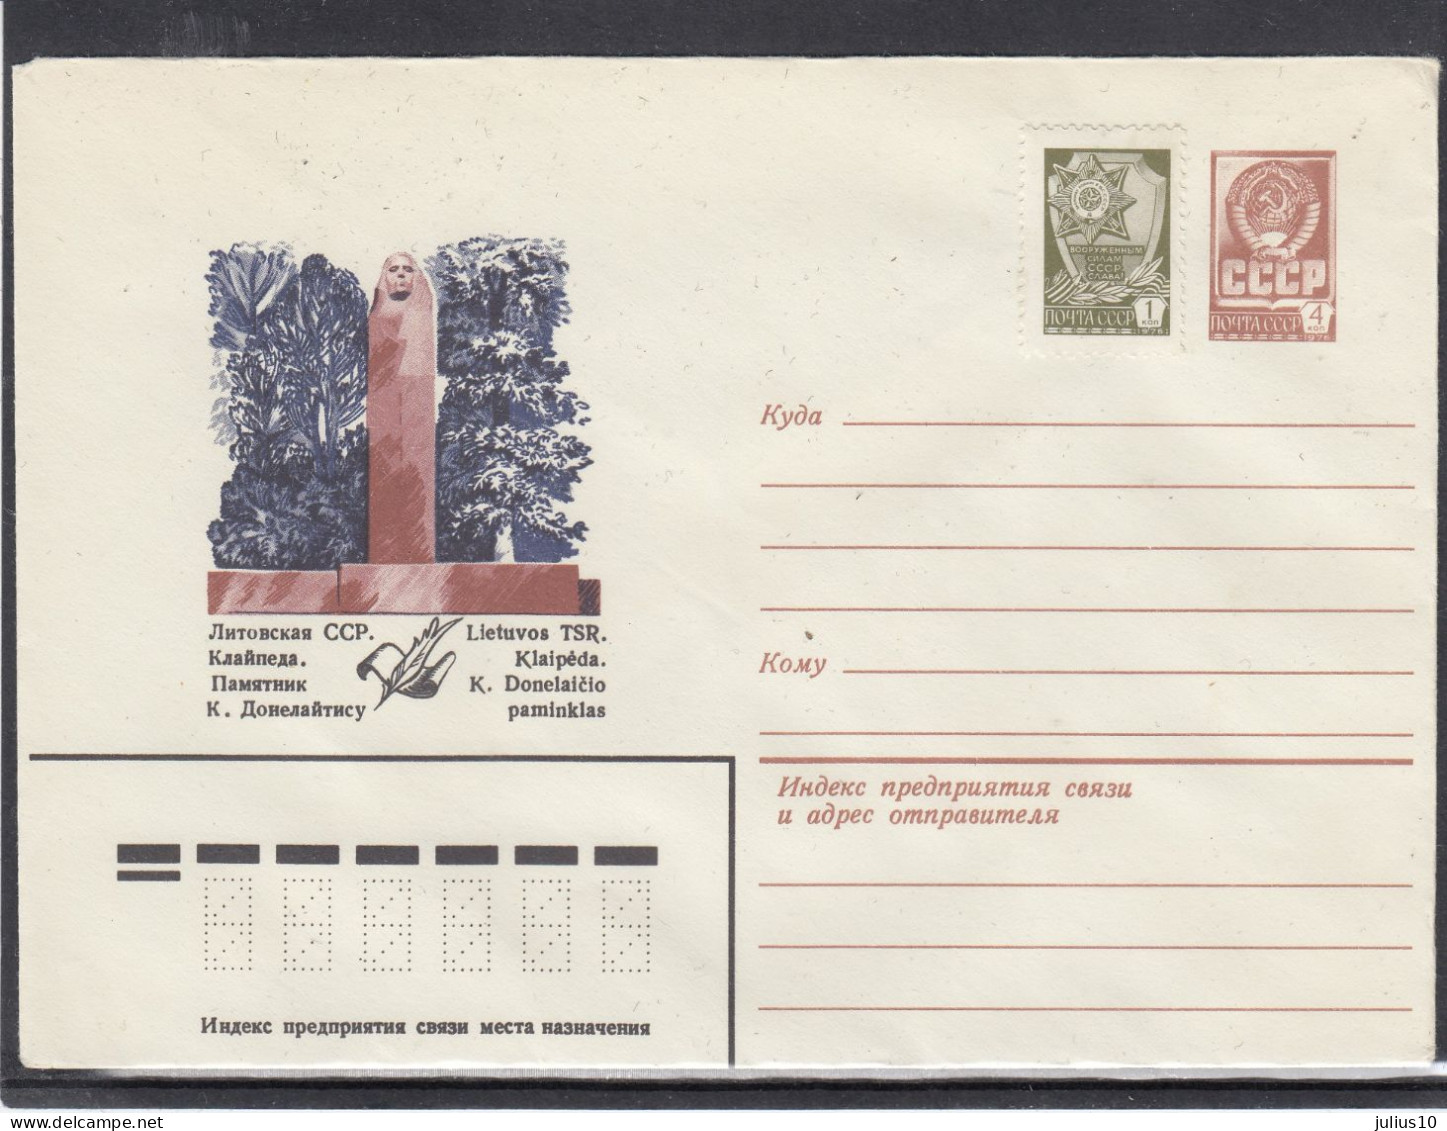 LITHUANIA (USSR) 1982 Cover Klaipeda Poet K.Donelaitis Monument #LTV131 - Lithuania